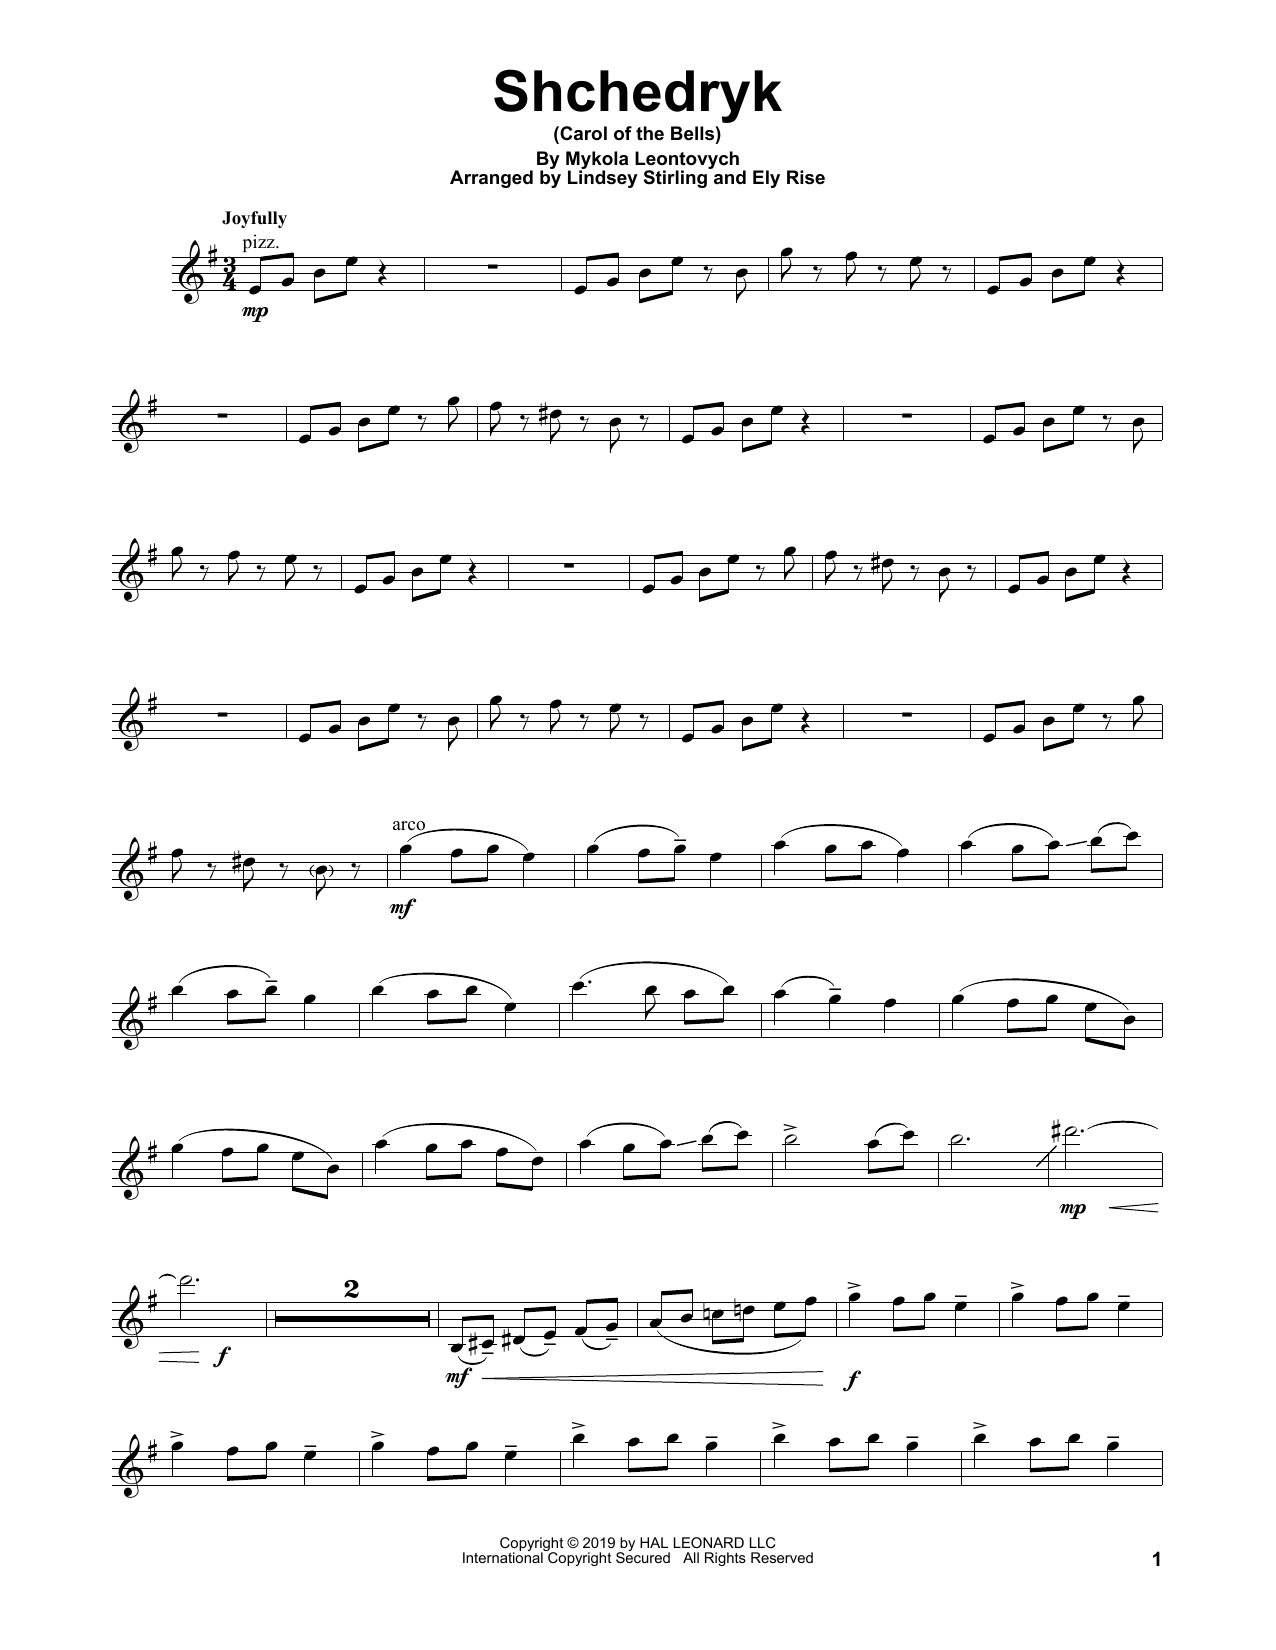 Lindsey Stirling Shchedryk (Carol Of The Bells) Sheet Music Notes & Chords for Violin Solo - Download or Print PDF